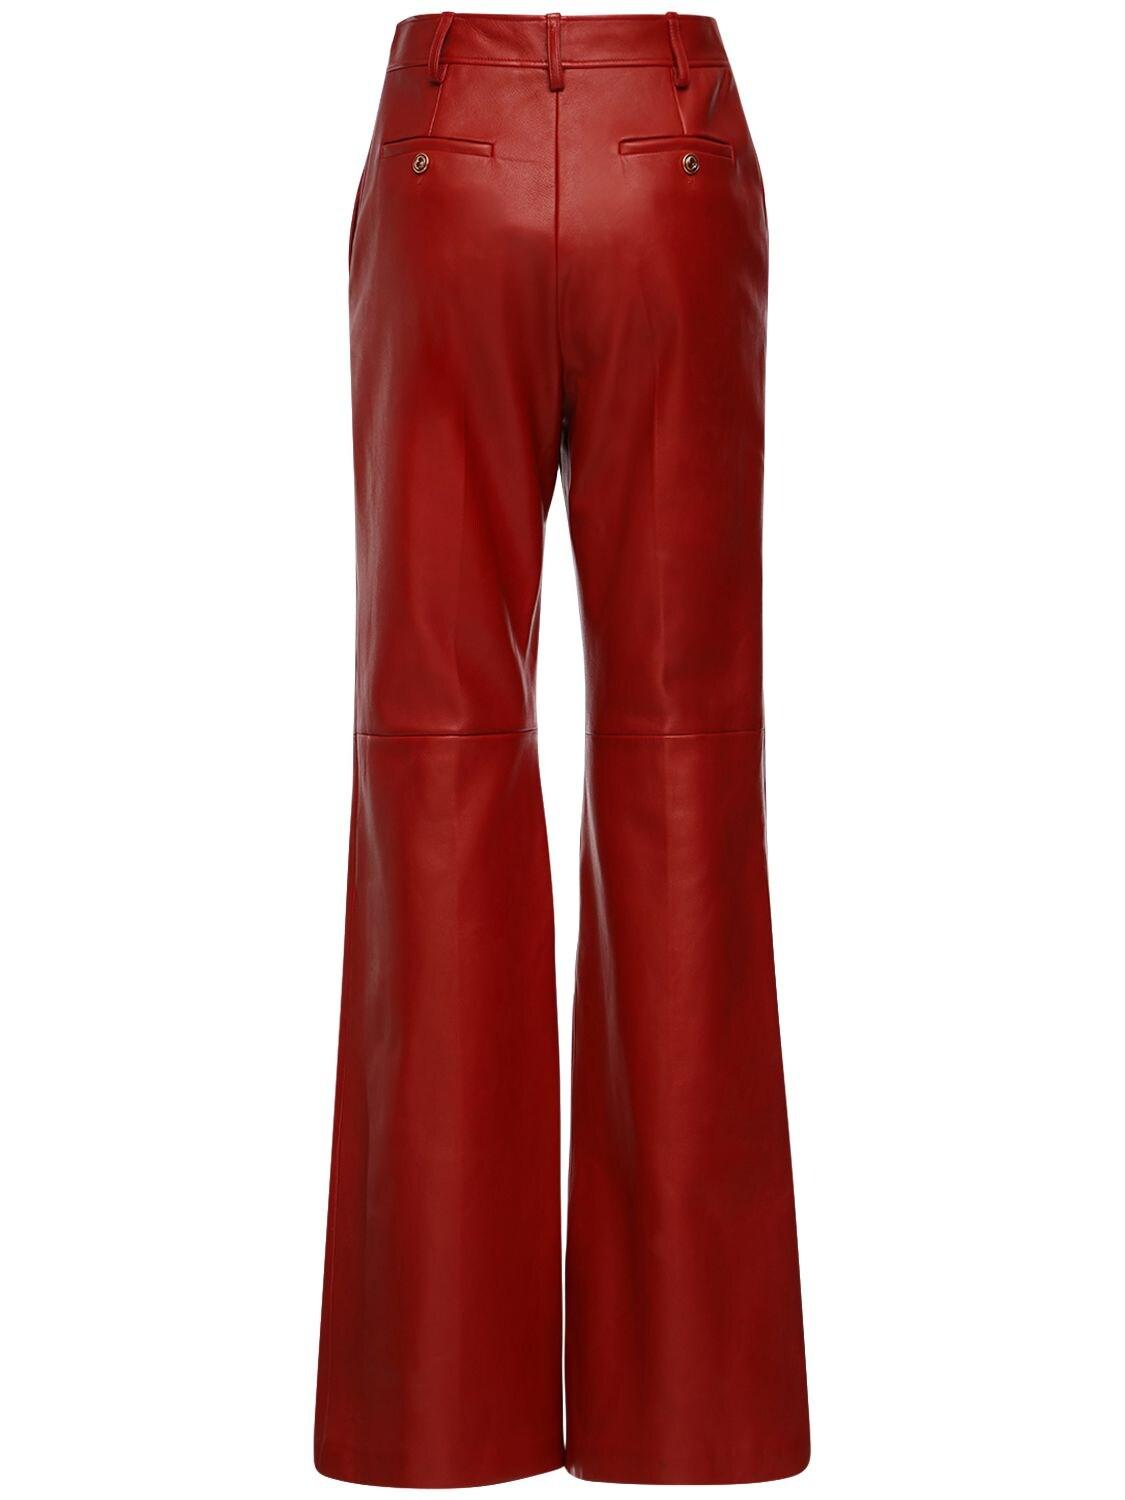 https://cdna.lystit.com/photos/lvr/9482d57e/gucci-Red-Plonge-Leather-High-Waist-Pants.jpeg